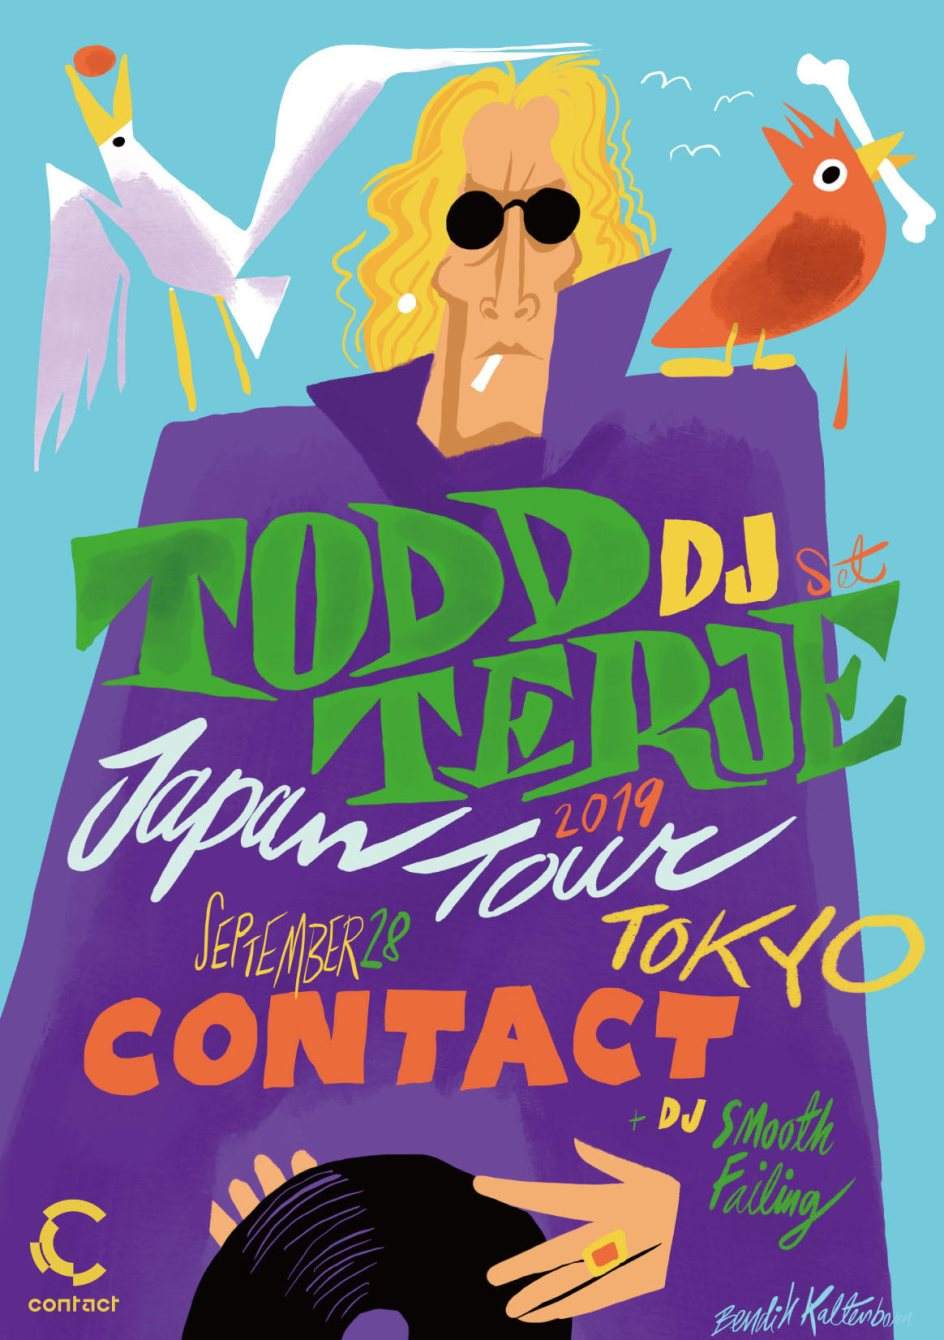 Todd Terje Japan Tour 2019 - Flyer front